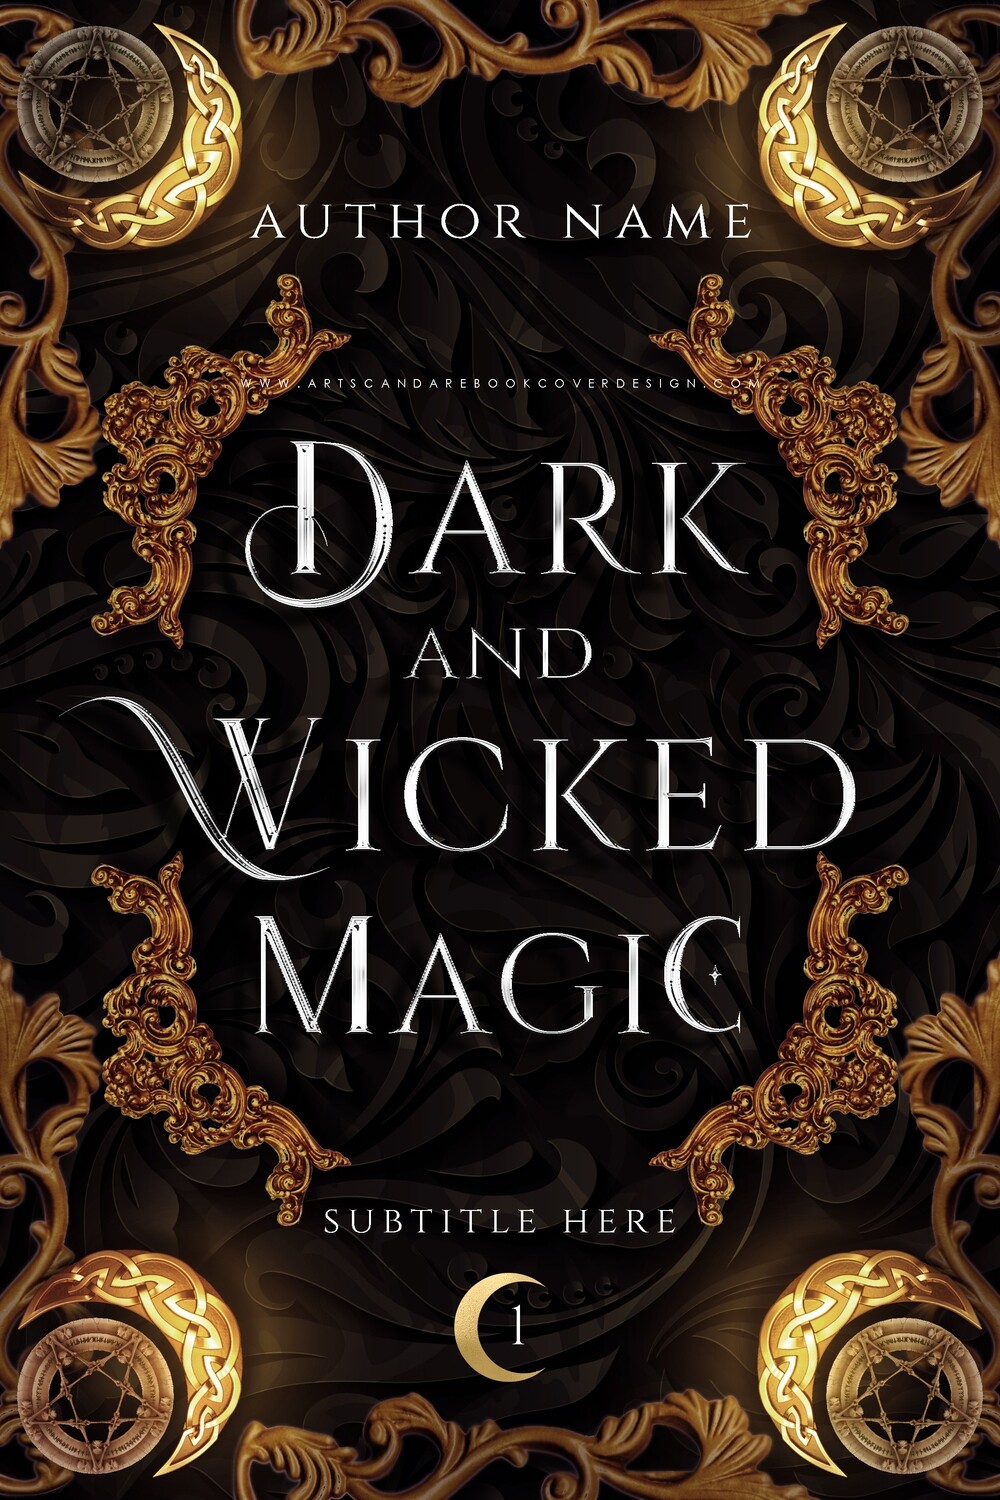 Ebook: Dark and Wicked Magic